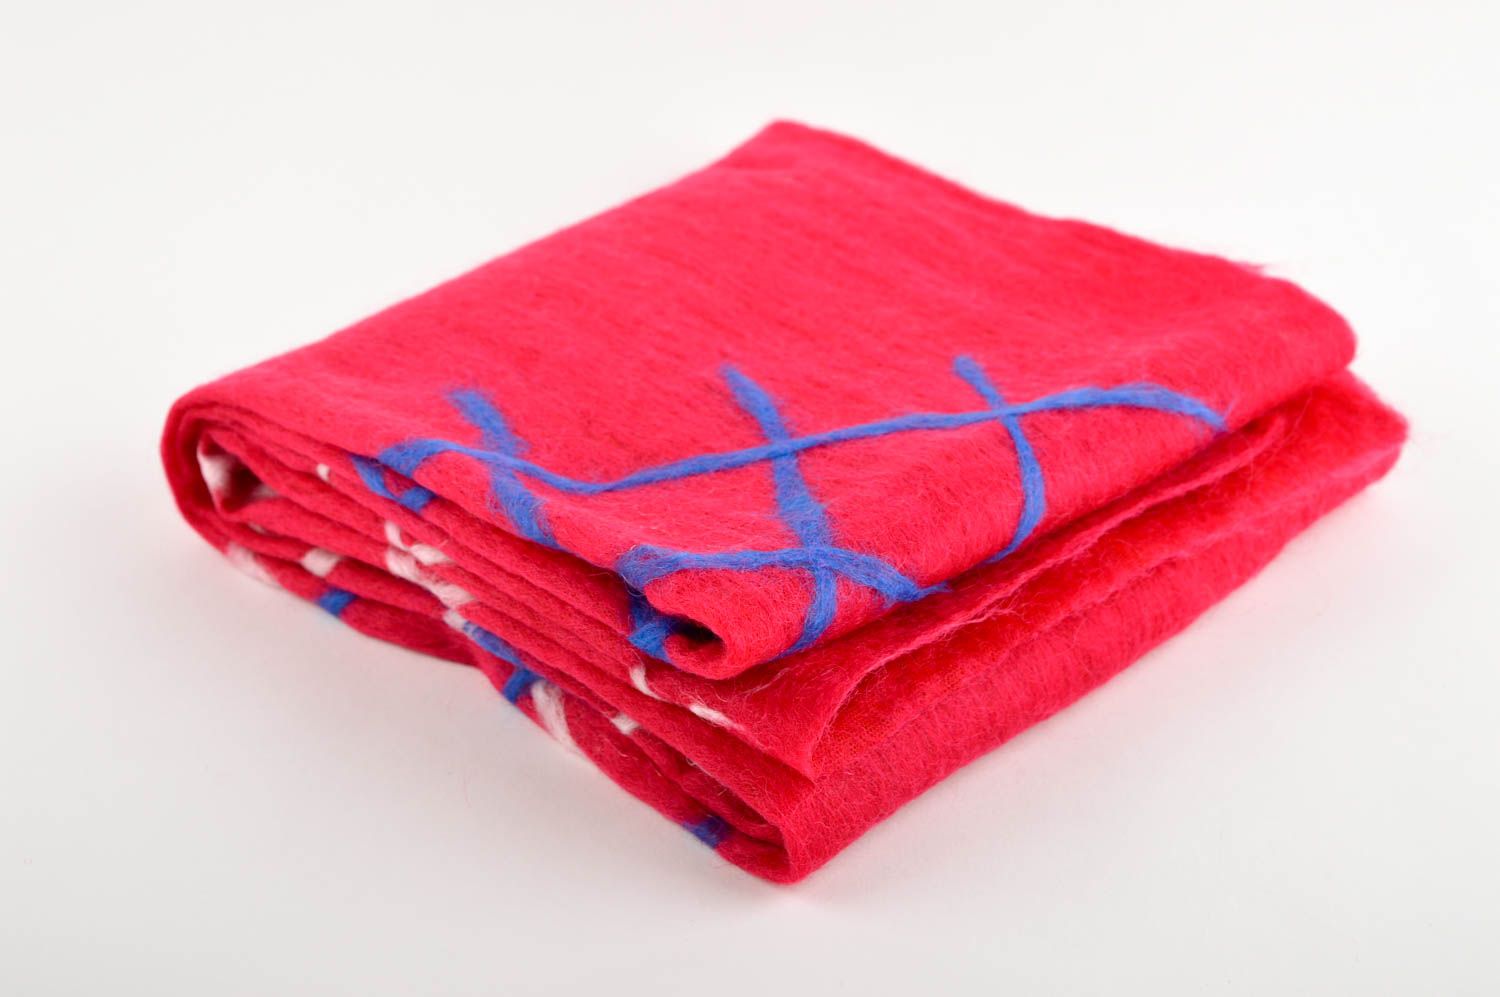 Handmade gefilzter Schal Frauen Accessoire roter Schal aus Wolle gemustert grell foto 4